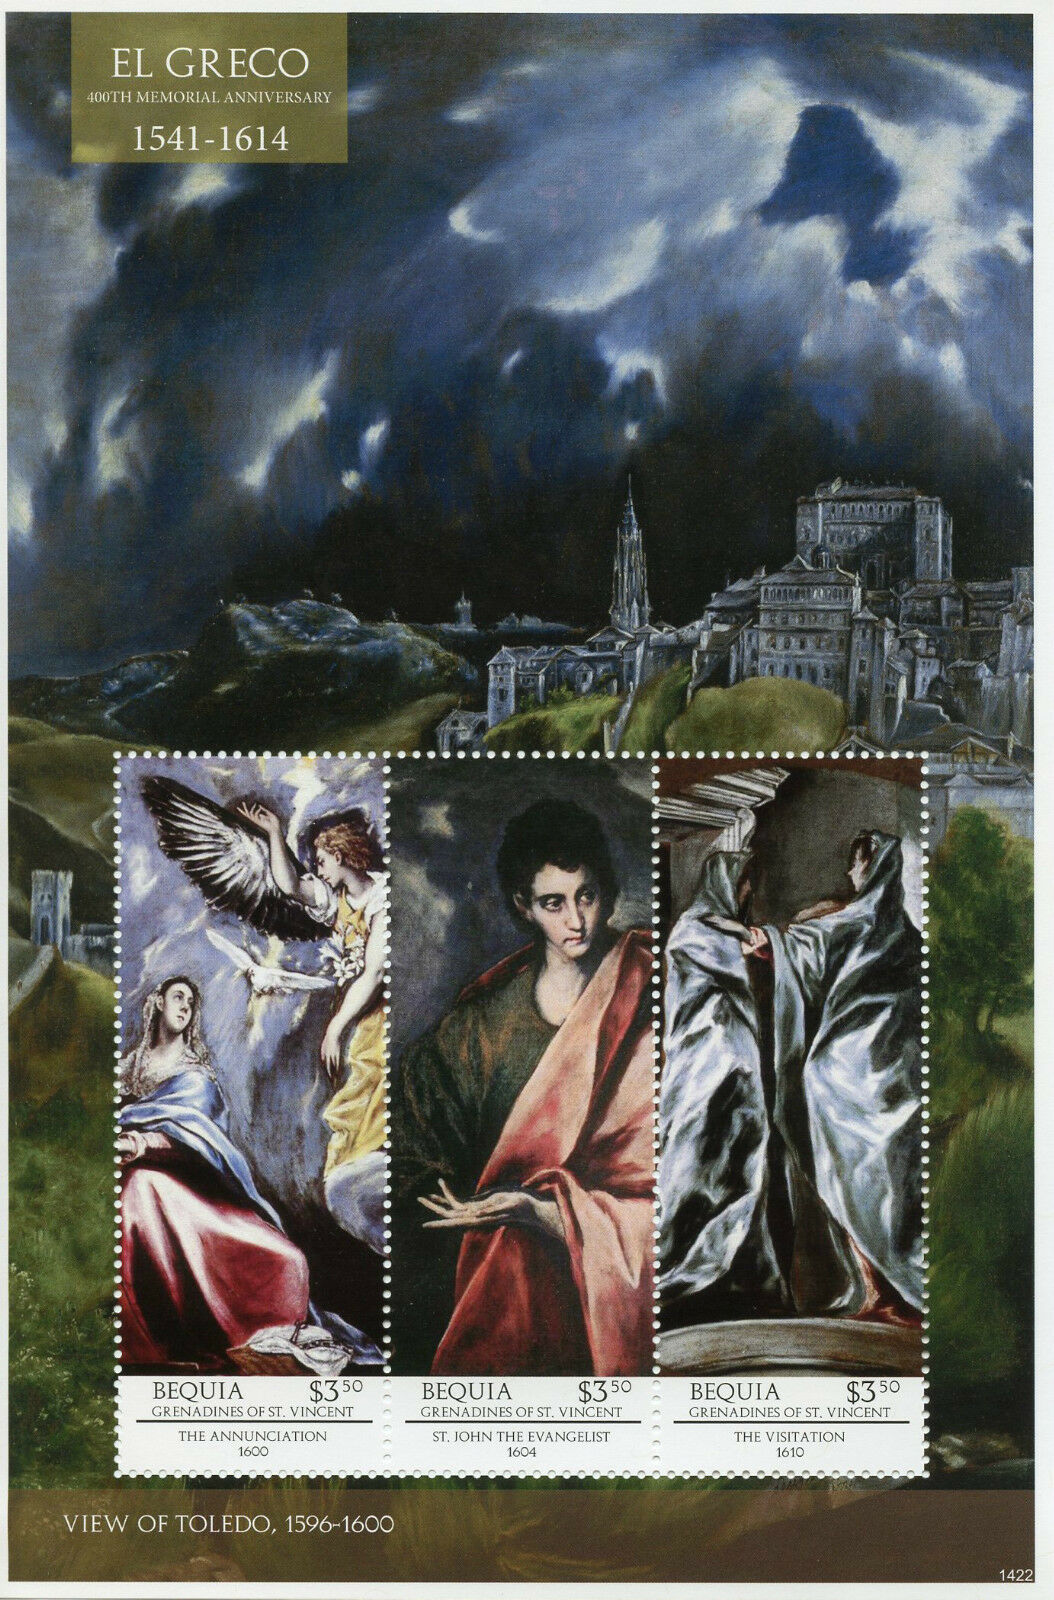 Bequia Grenadines St Vincent 2014 MNH El Greco 400th Memorial Anniv 3v M/S I